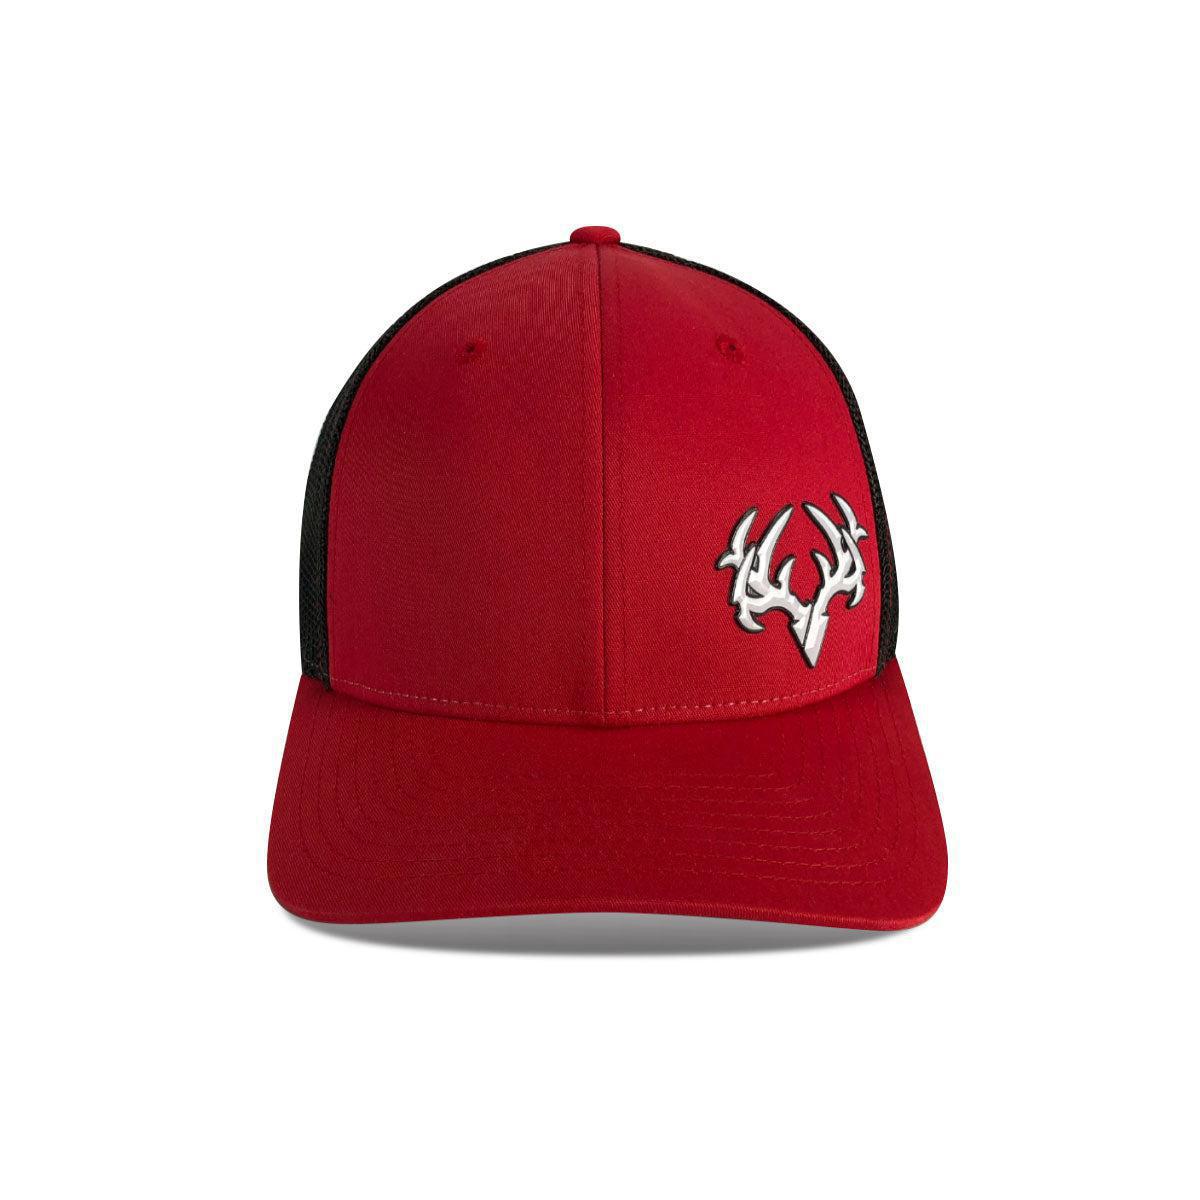 Big Red Flex Hat